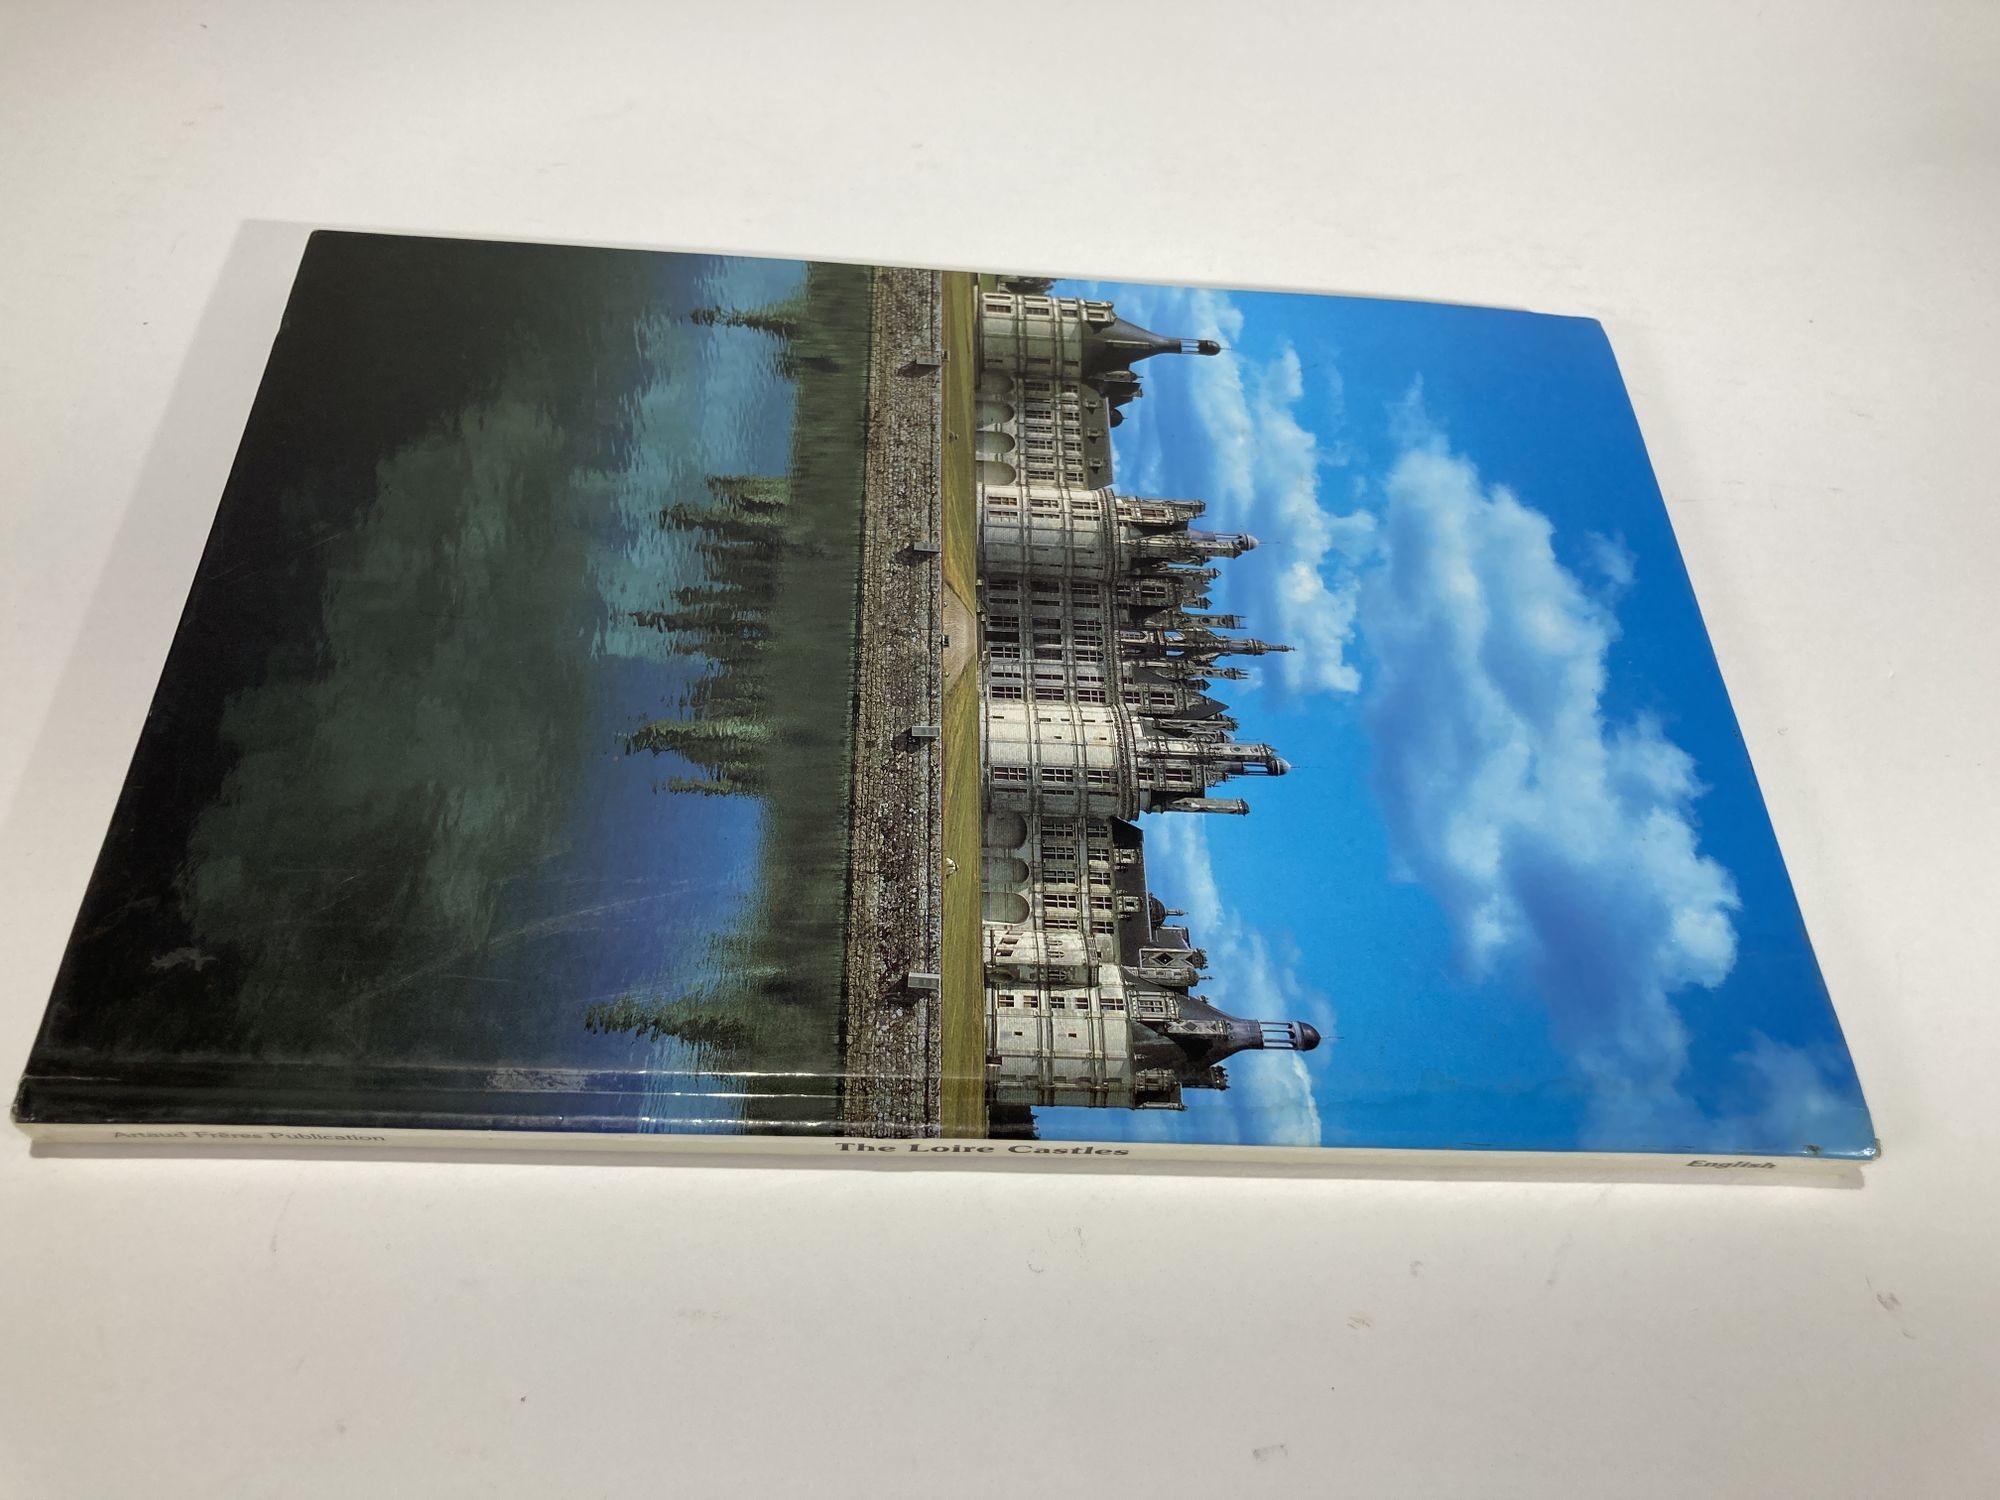 French Loire Castles Artaud Freres Publication Hardcover Book by Armel De Wismes For Sale